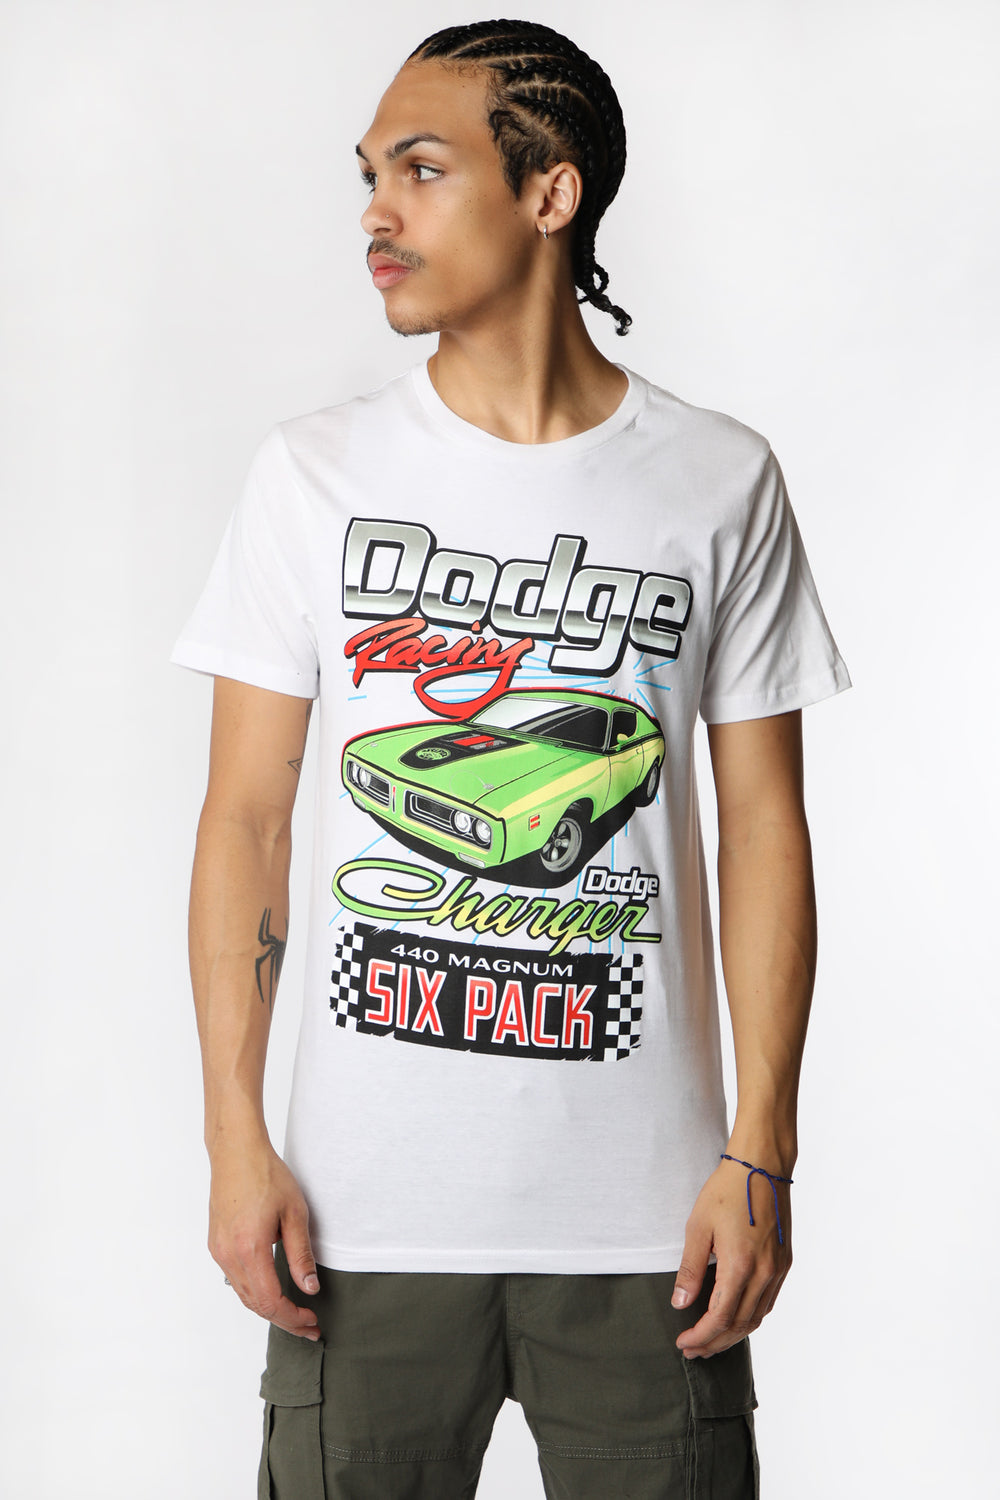 Mens Dodge Charger Racing T-Shirt Mens Dodge Charger Racing T-Shirt